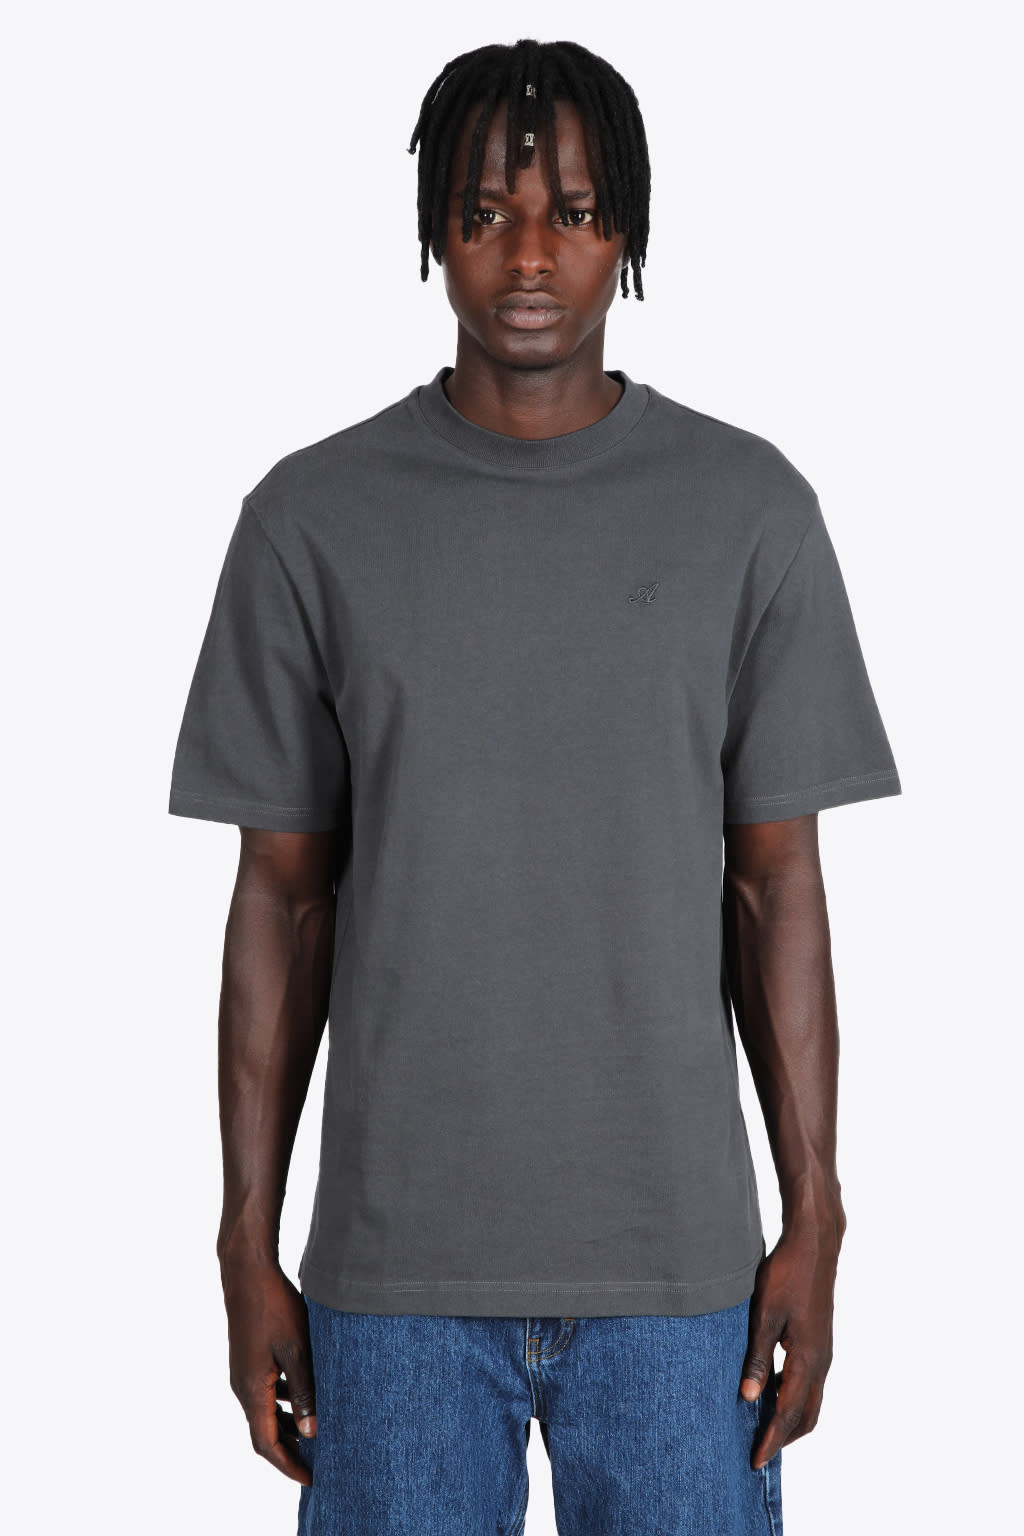 Axel Arigato Signature T-shirt Faded black cotton t-shirt with chest embroidery - Signature t-shirt